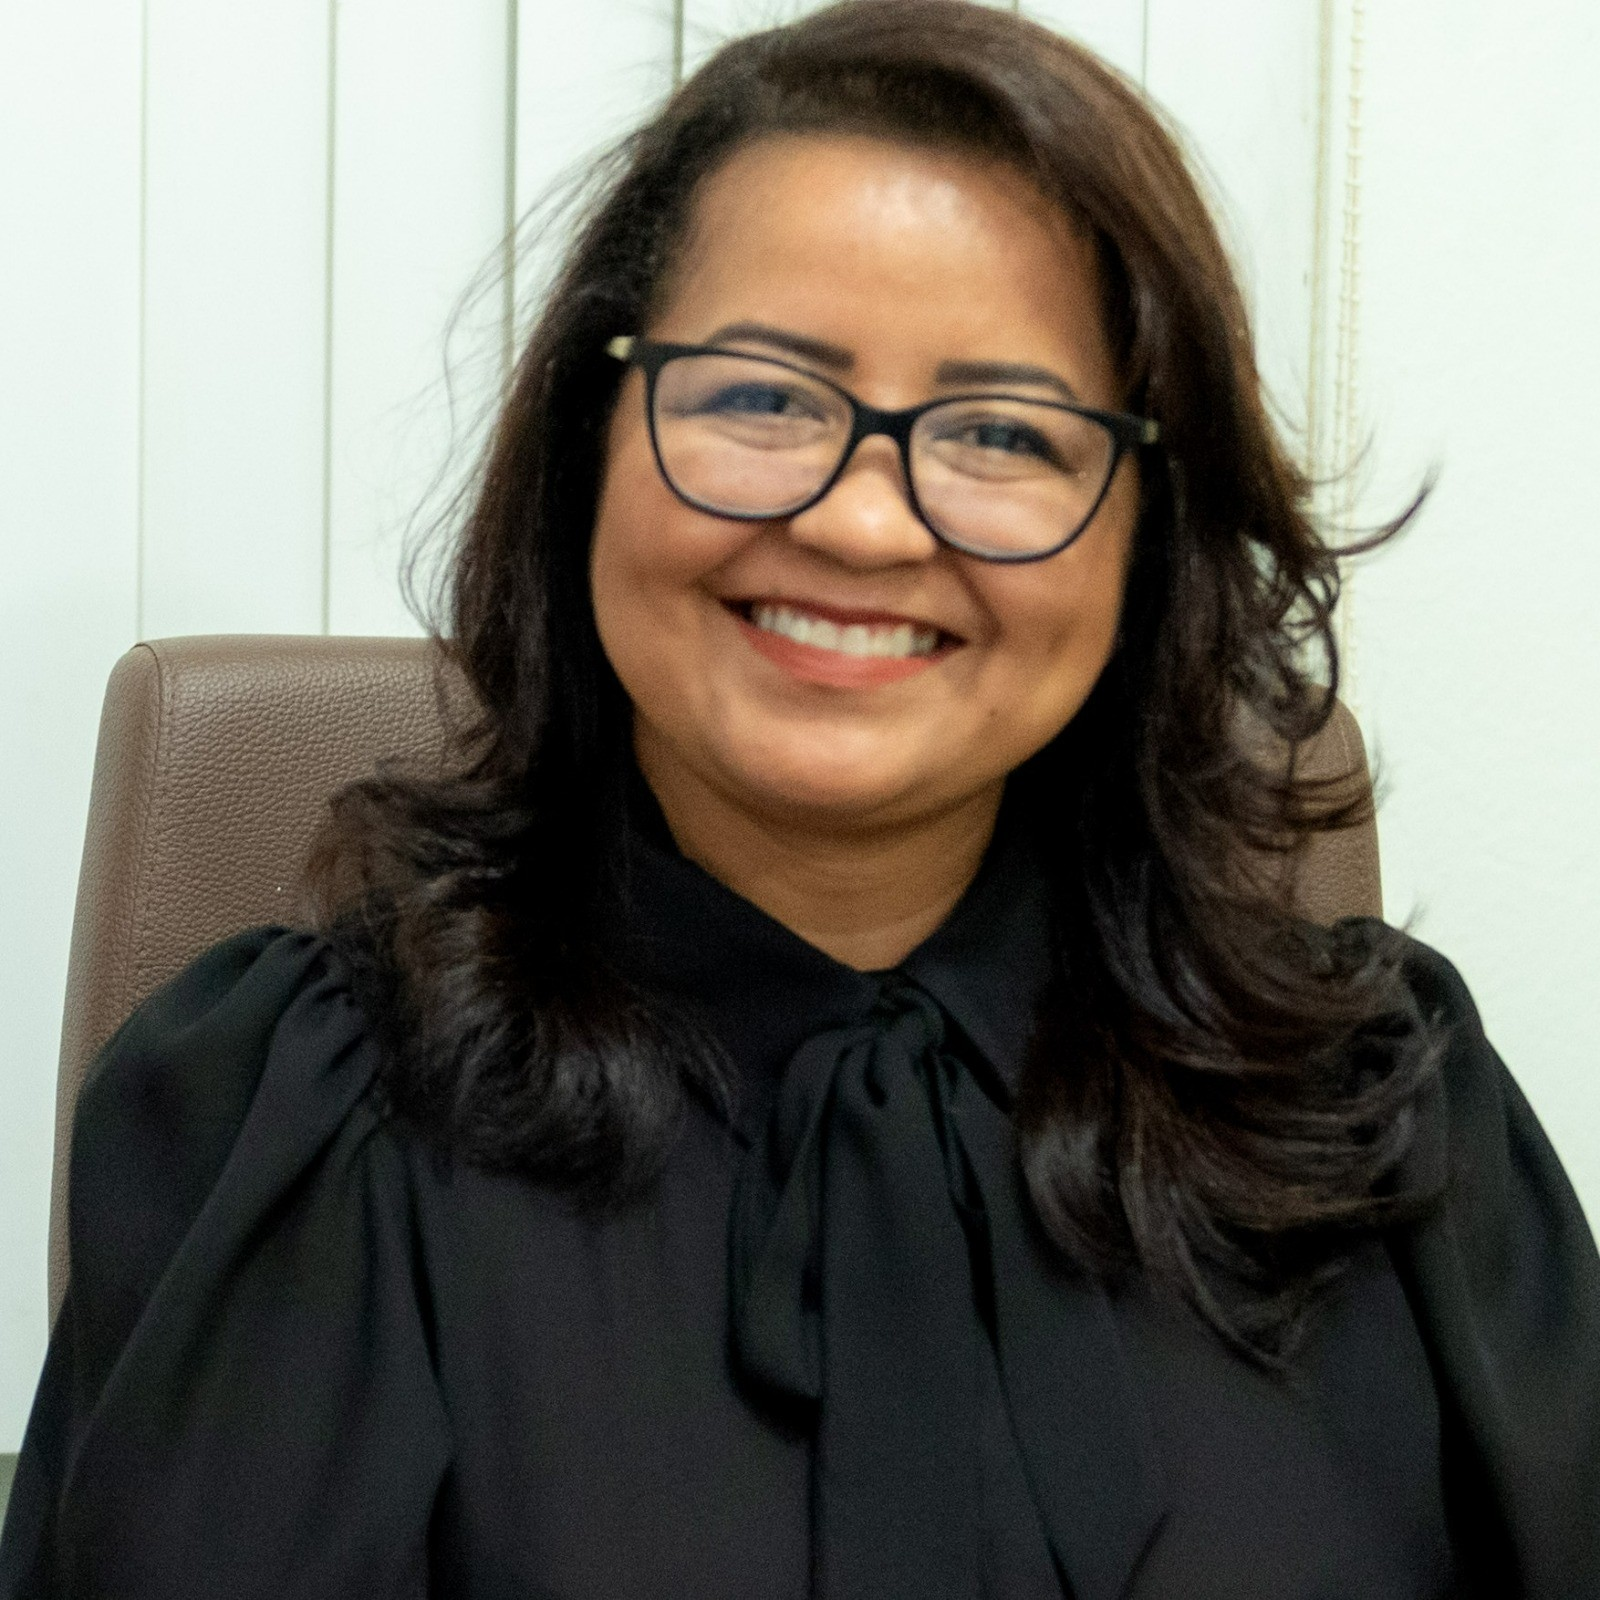 Andréia Neres Ferreira